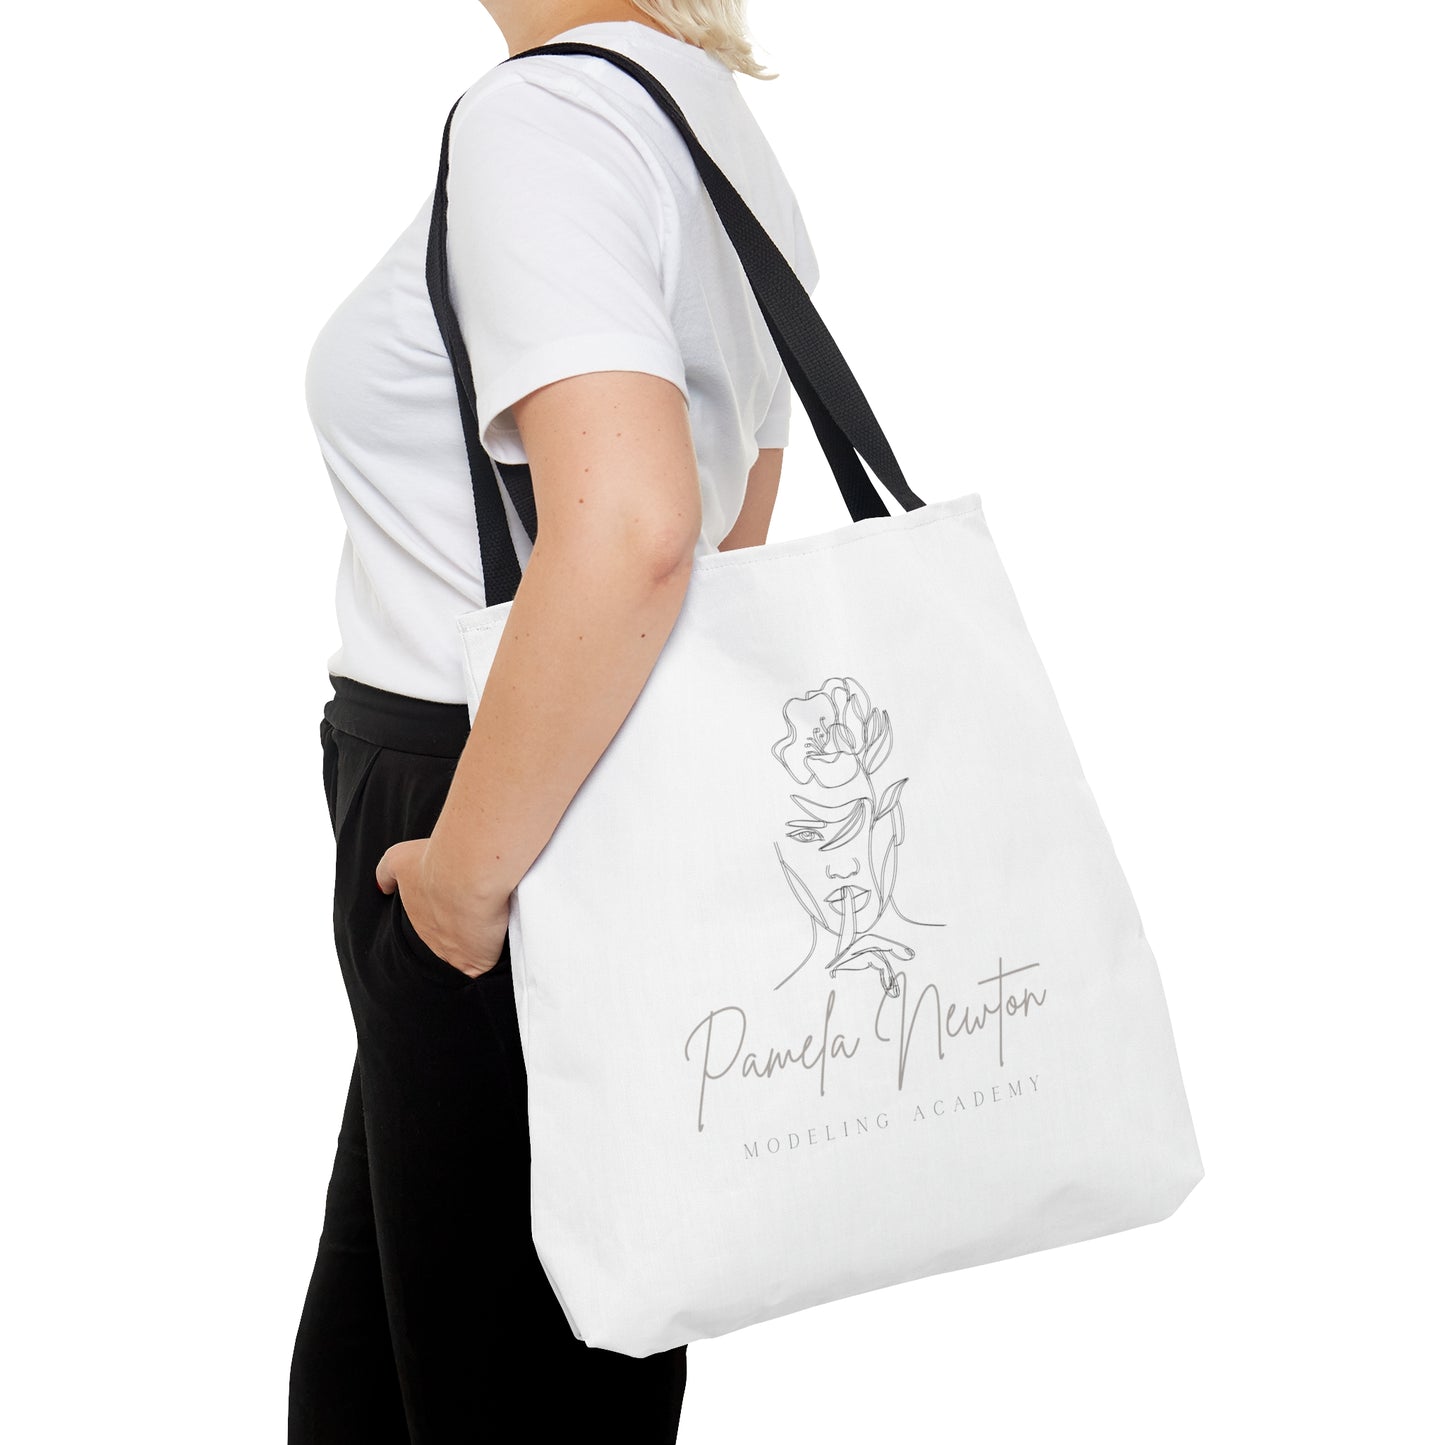 Pamela Newton Modeling Academy Tote Bag